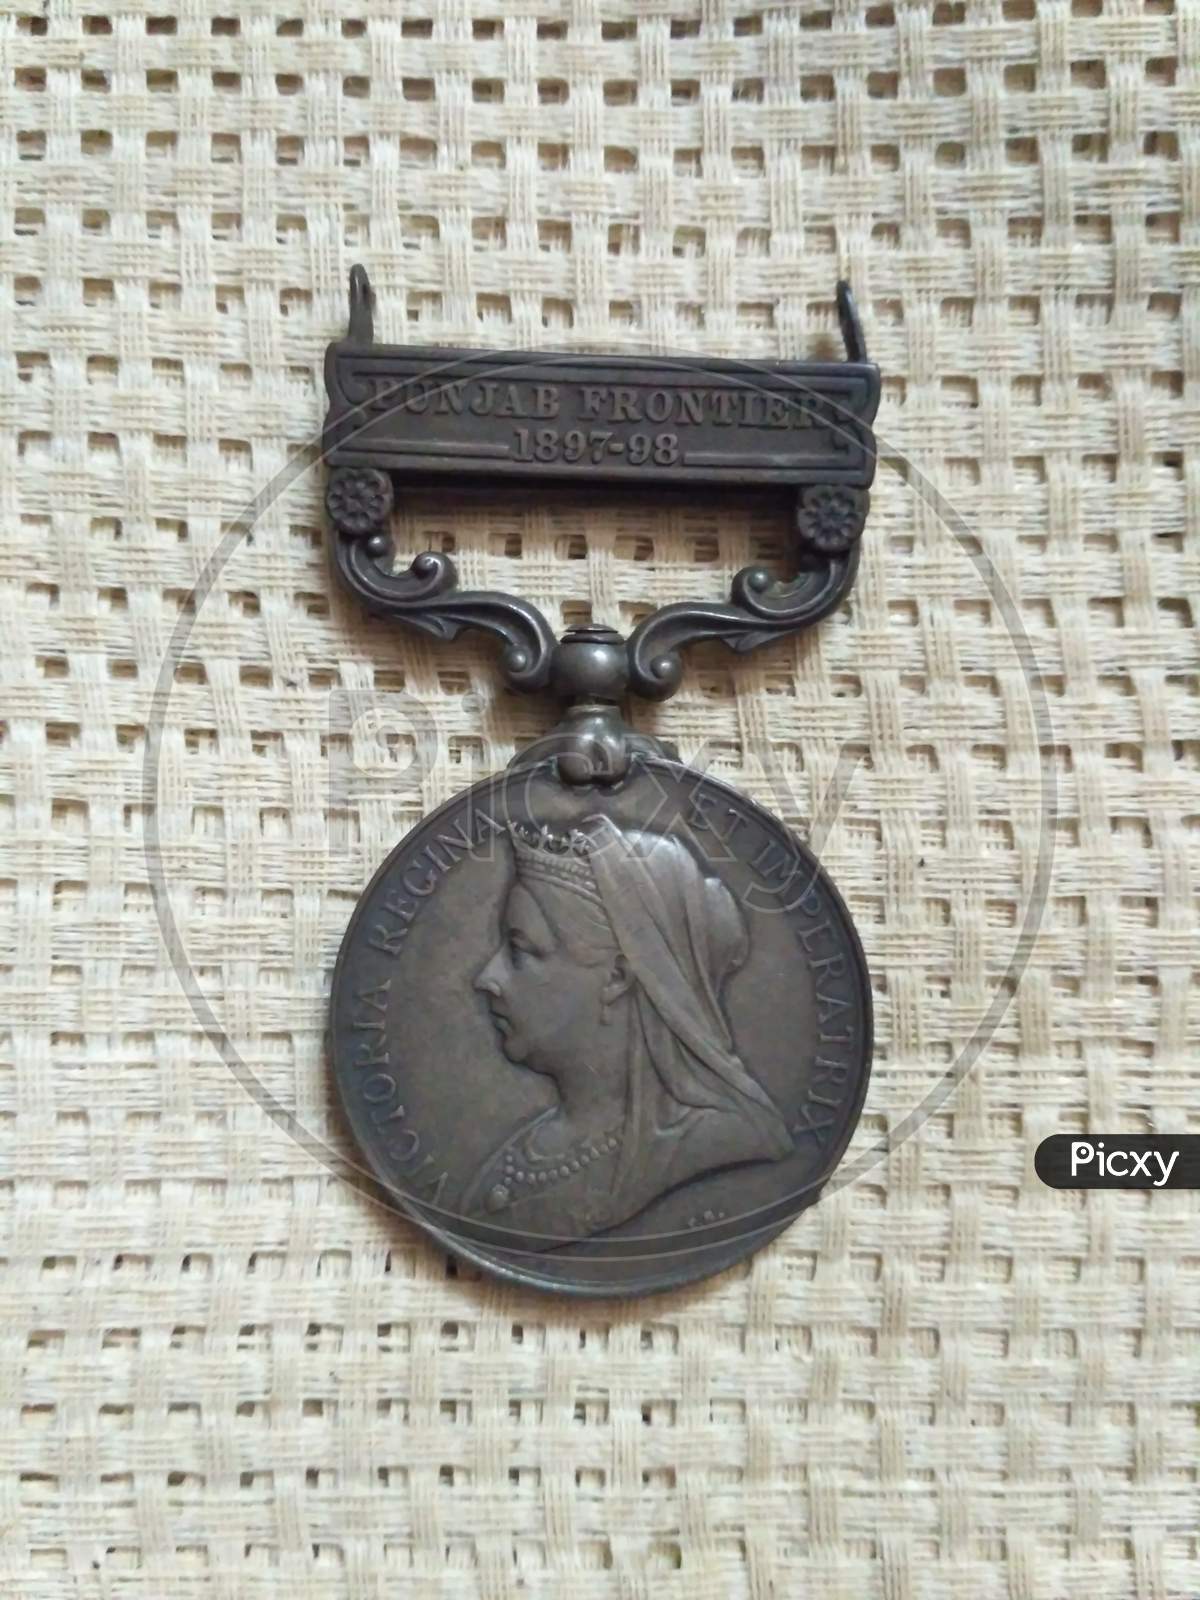 Victoria medal